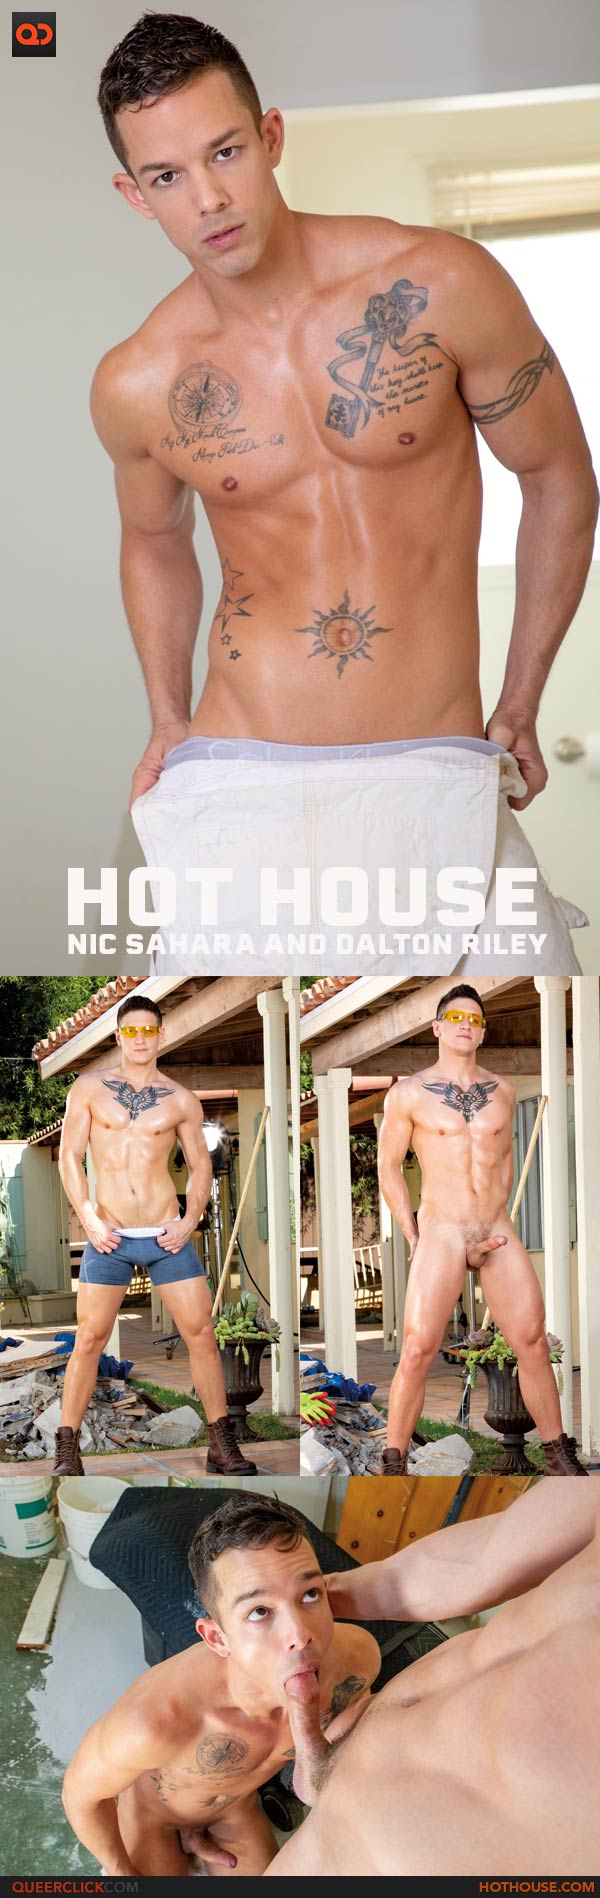 HotHouse: Nic Sahara and Dalton Riley